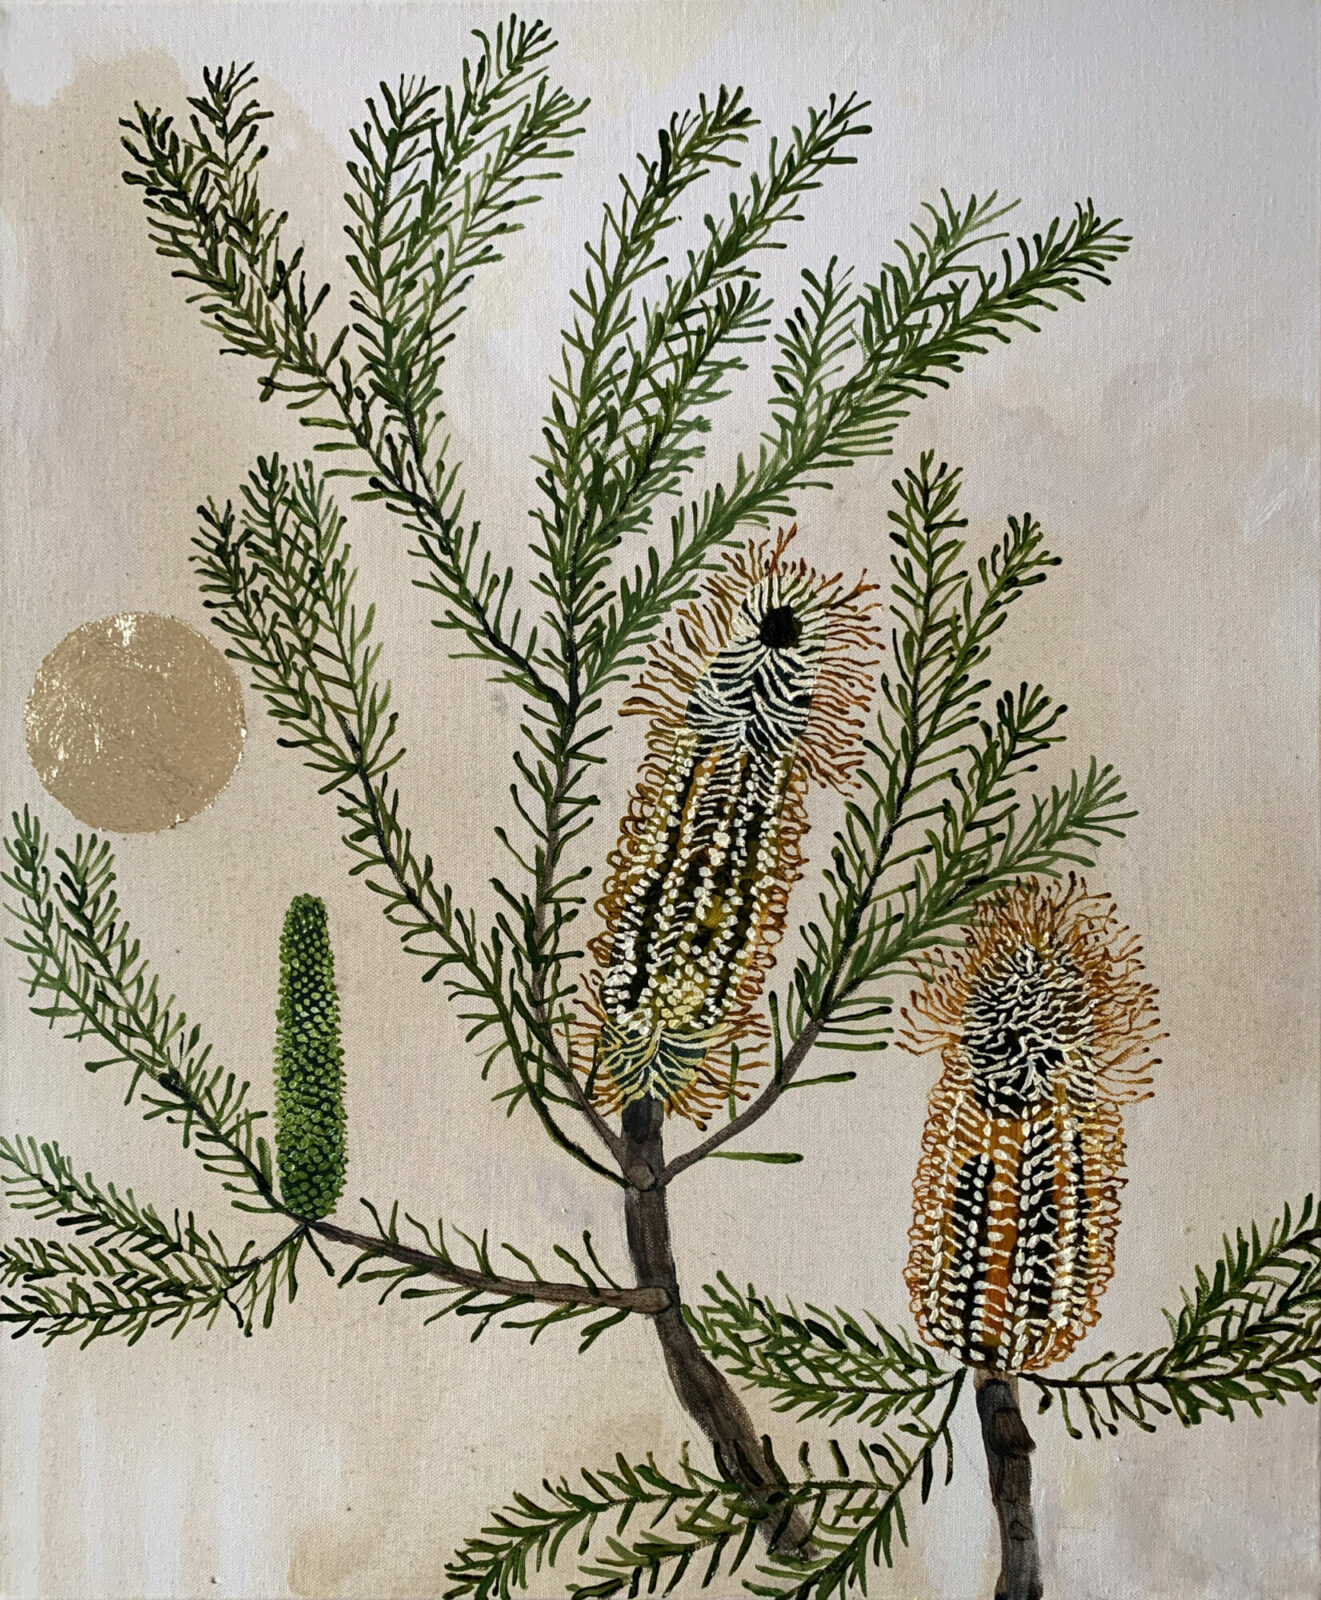 banksia ericifolia